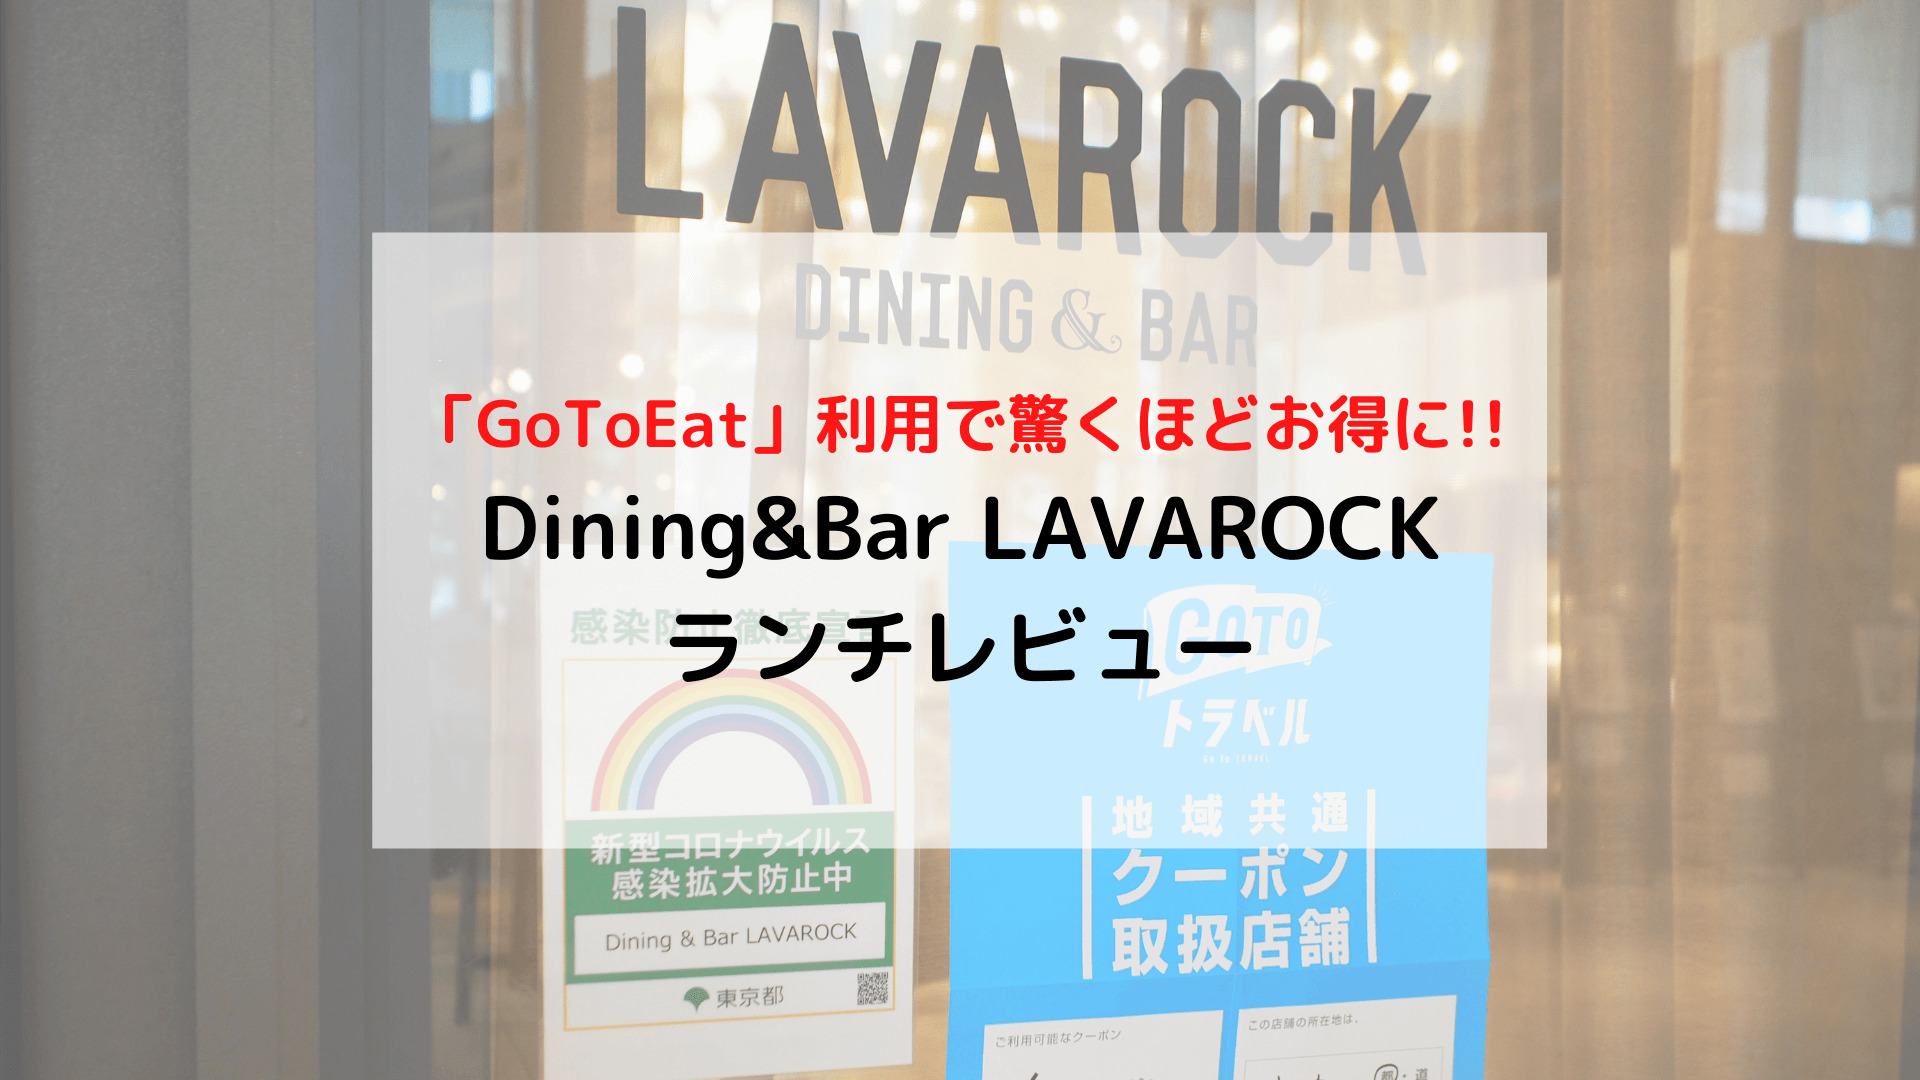 「GoToEat」コートヤード・バイ・マリオット東京ステーション1F「Dining&Bar LAVAROCK」ランチレビュー